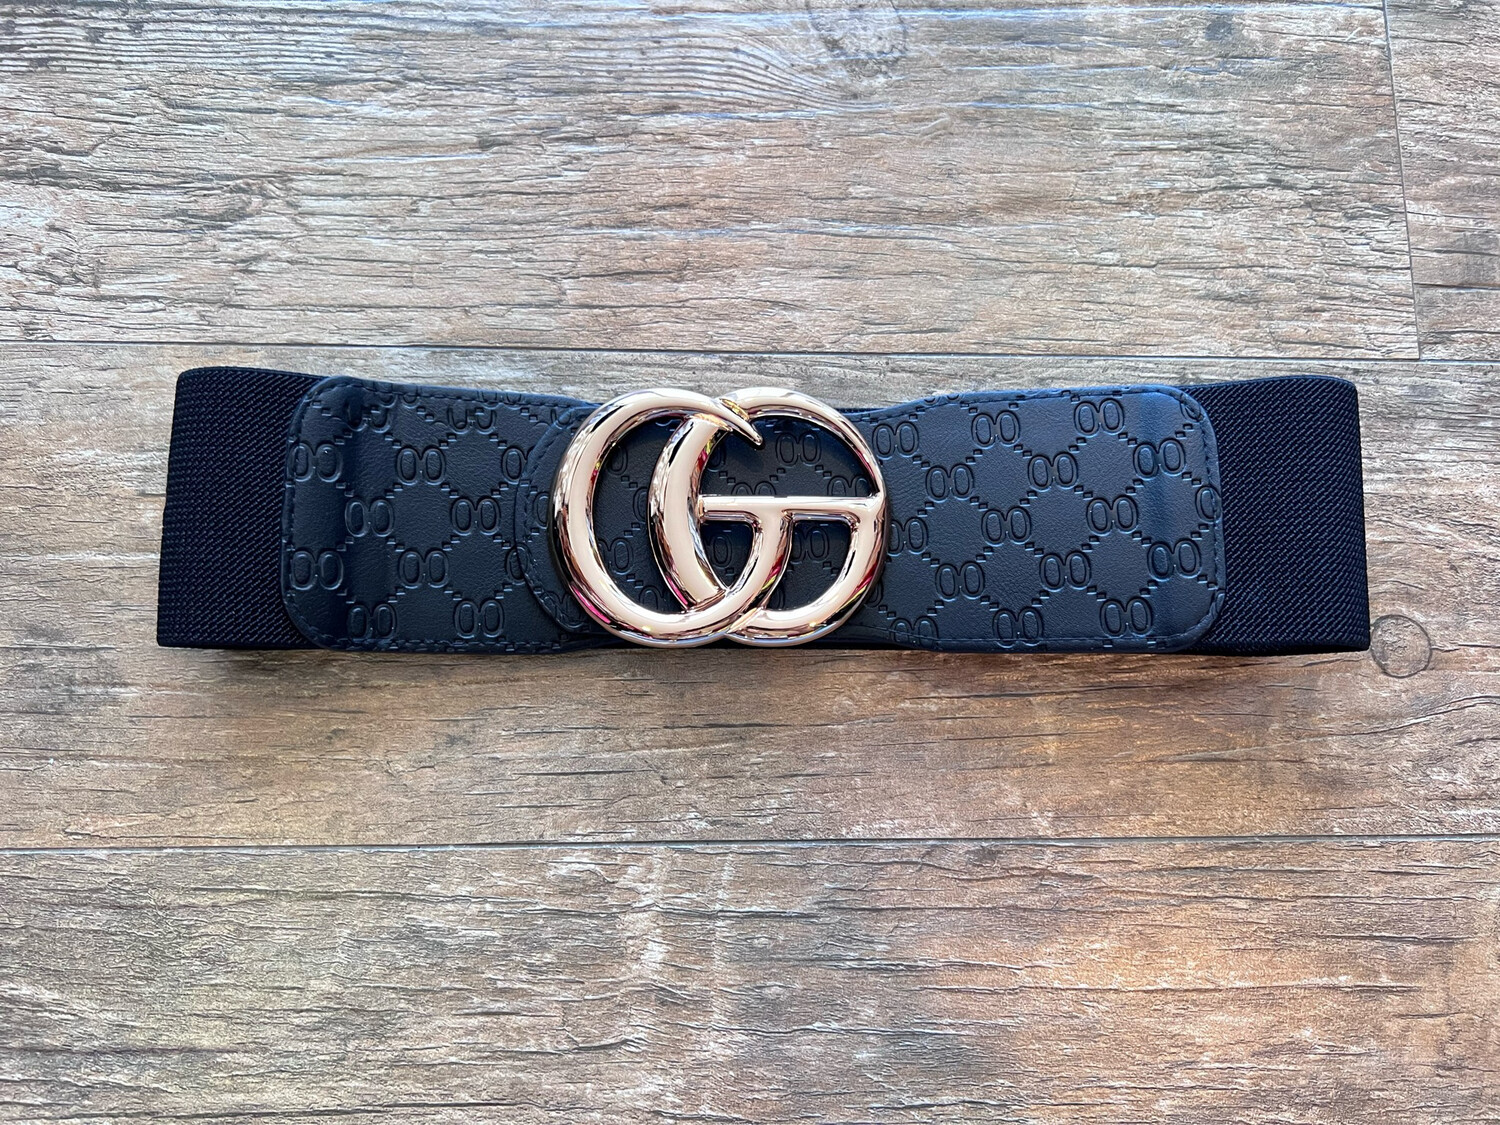 Black Spandex GG Belt